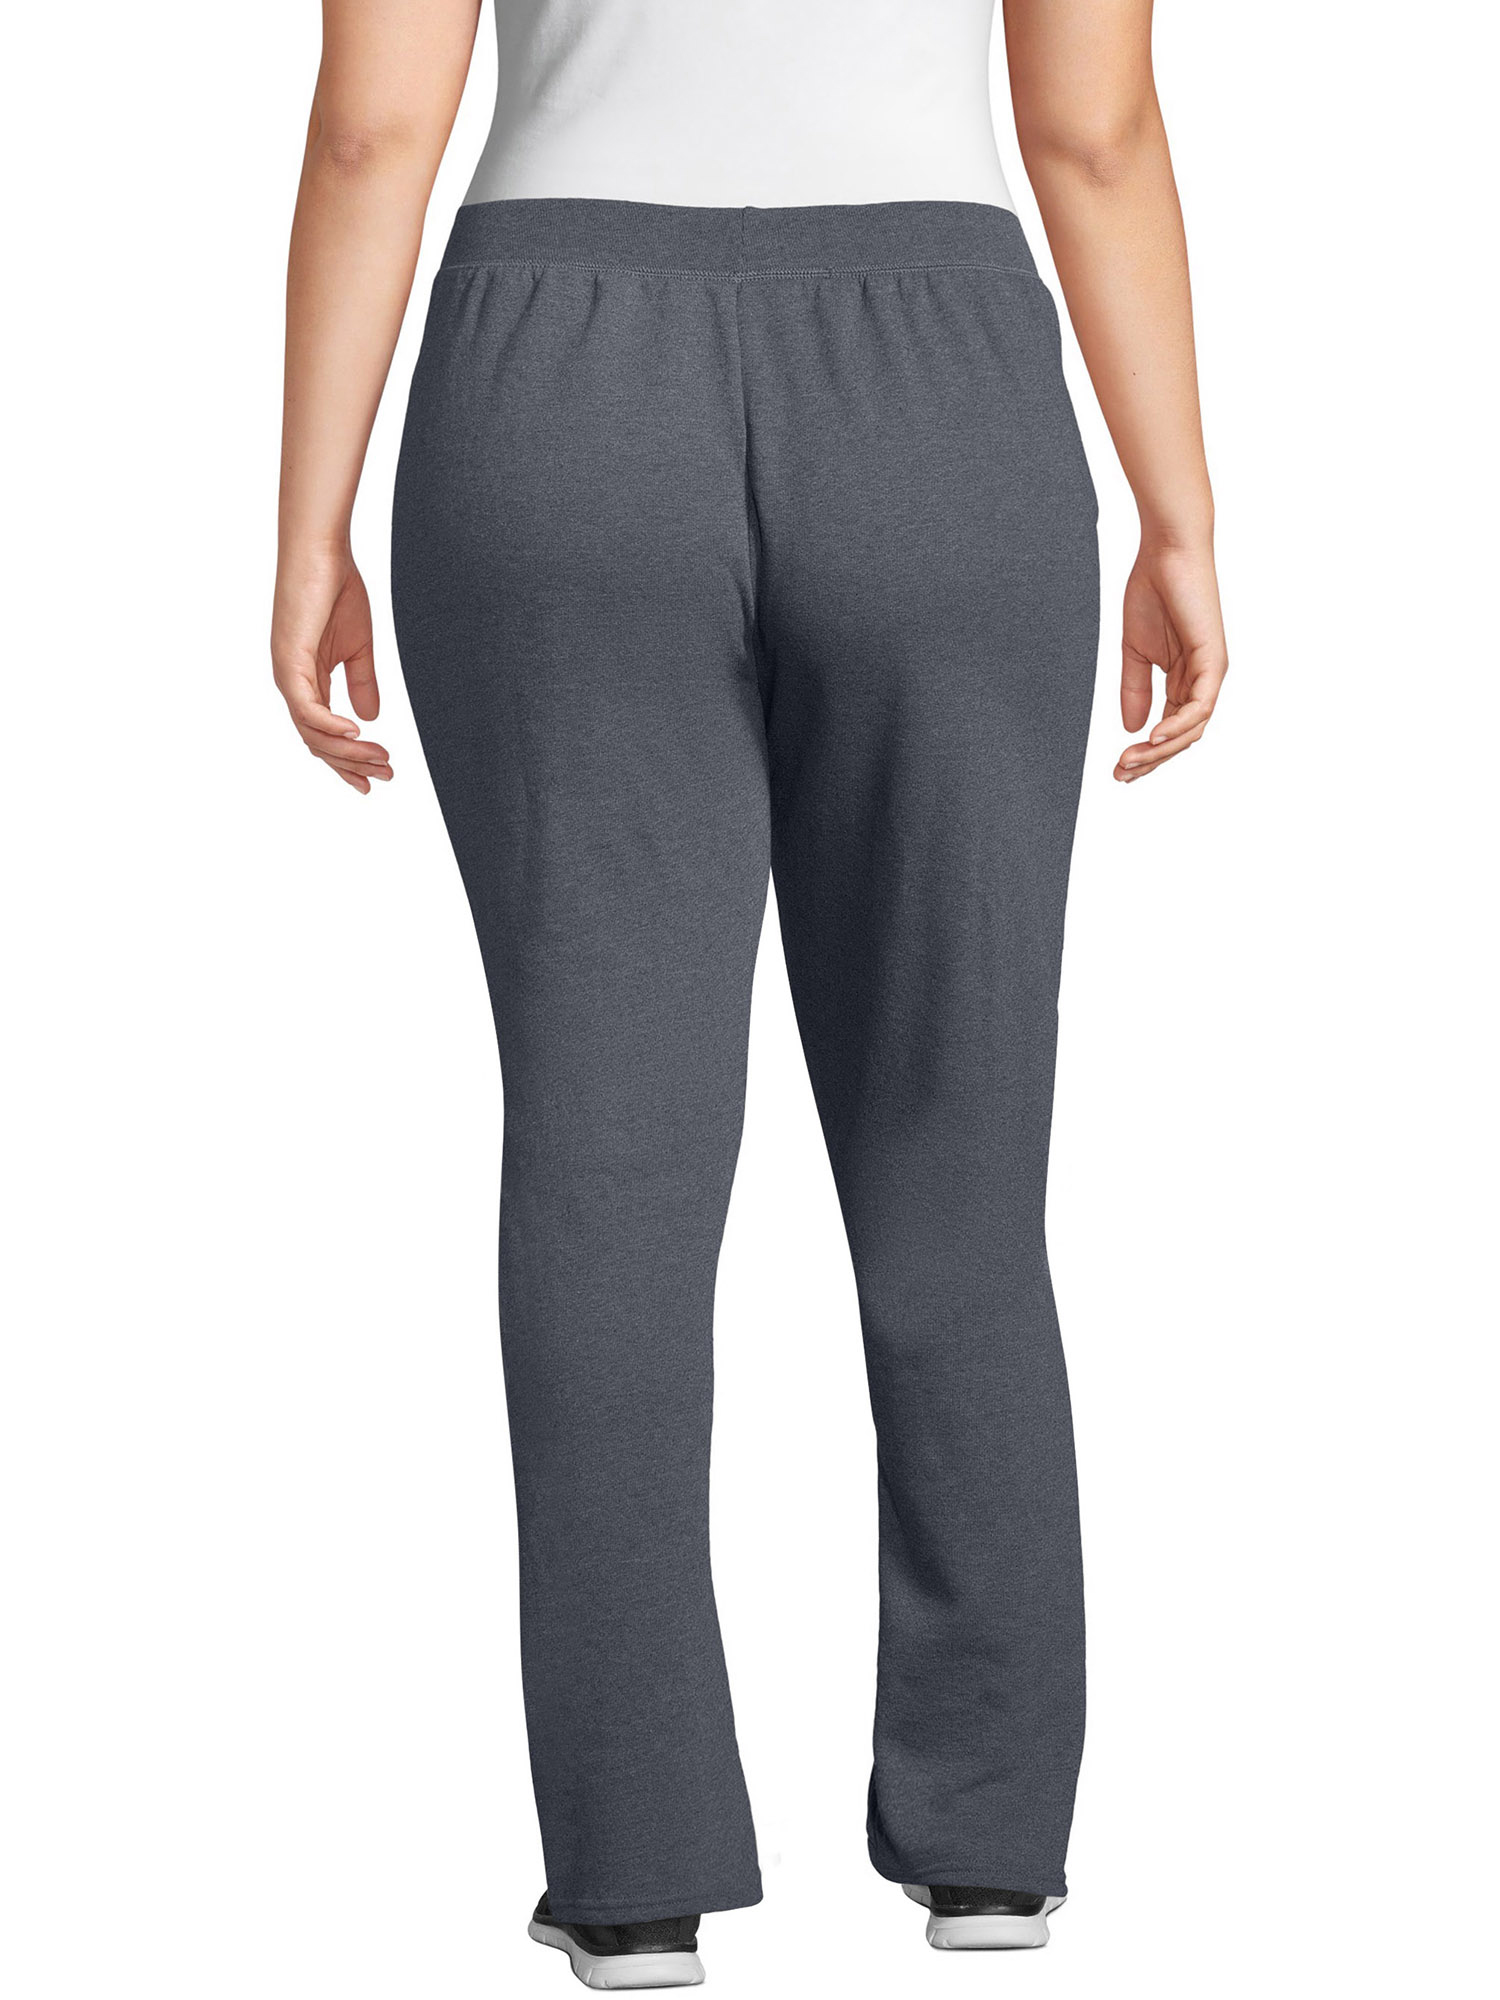 JMS by Hanes Women's Plus Size Fleece Sweatpants (Also Petite Sizes) - image 3 of 6